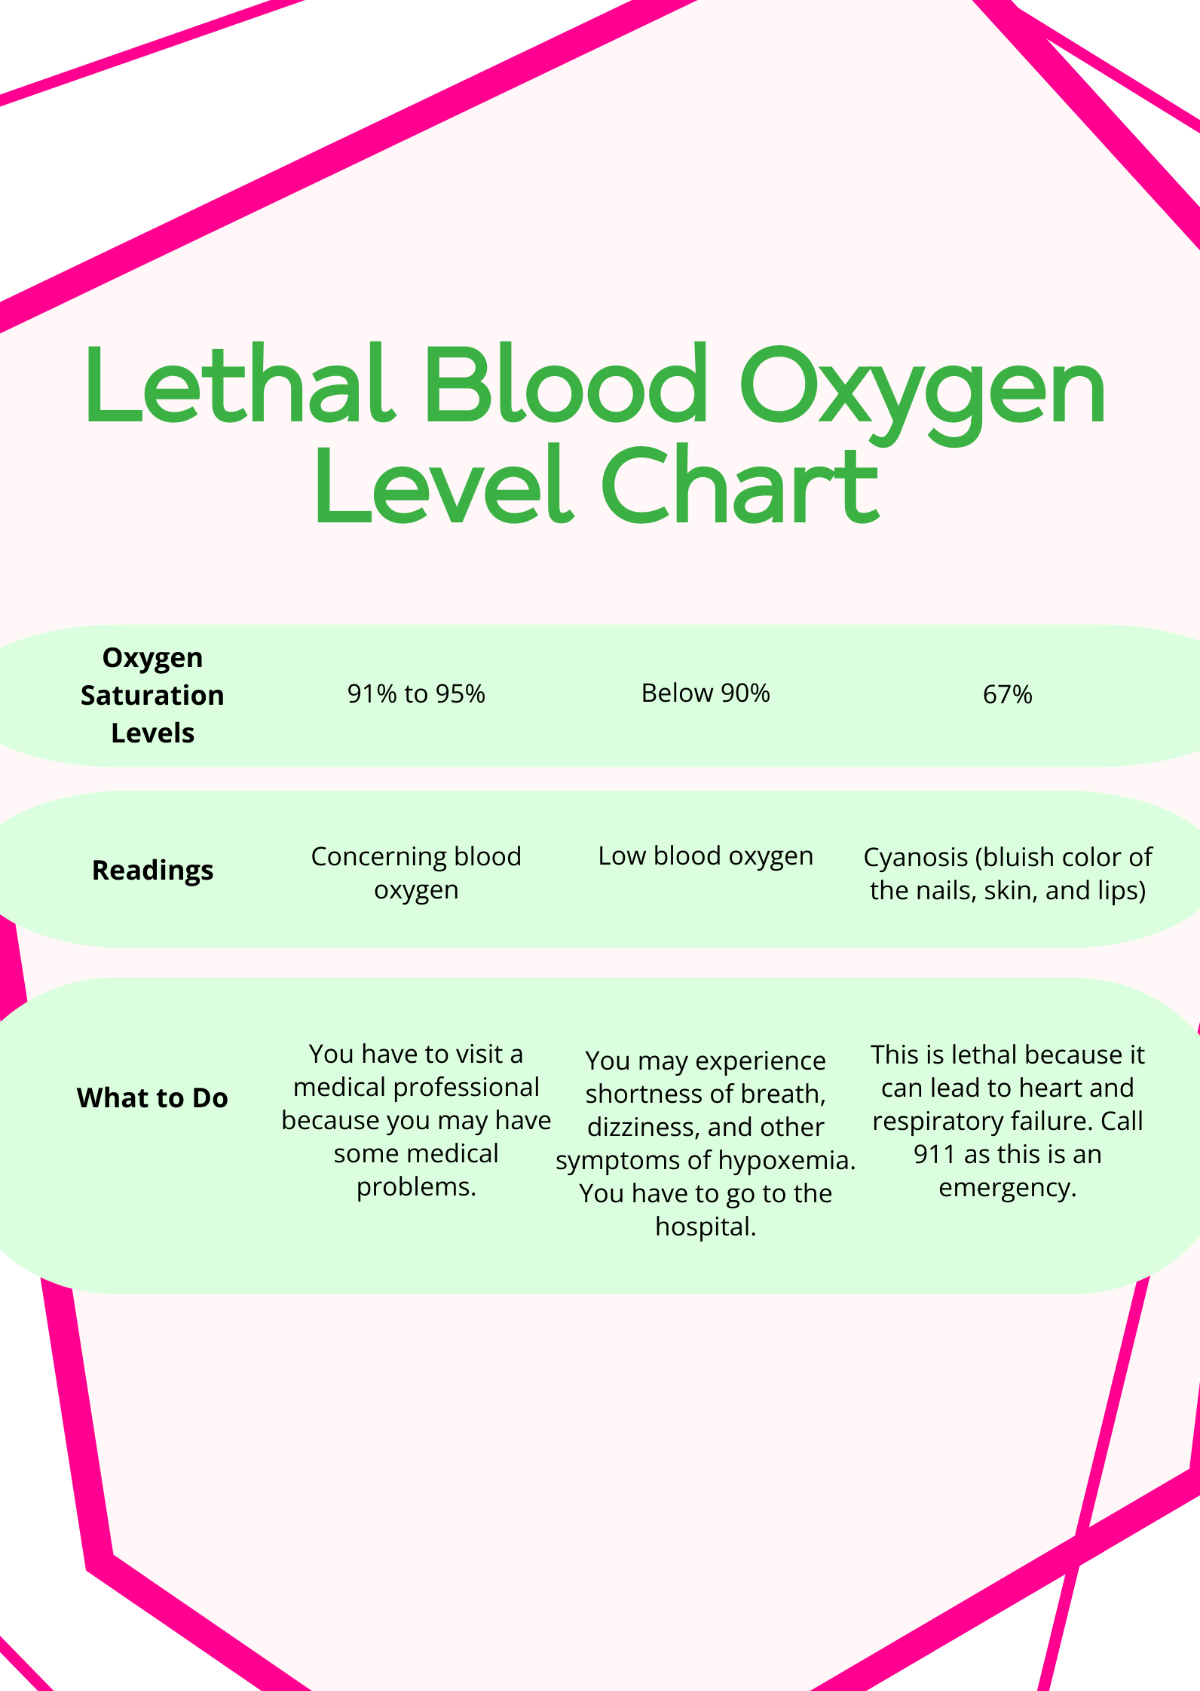 Lethal Blood Oxygen Level Chart